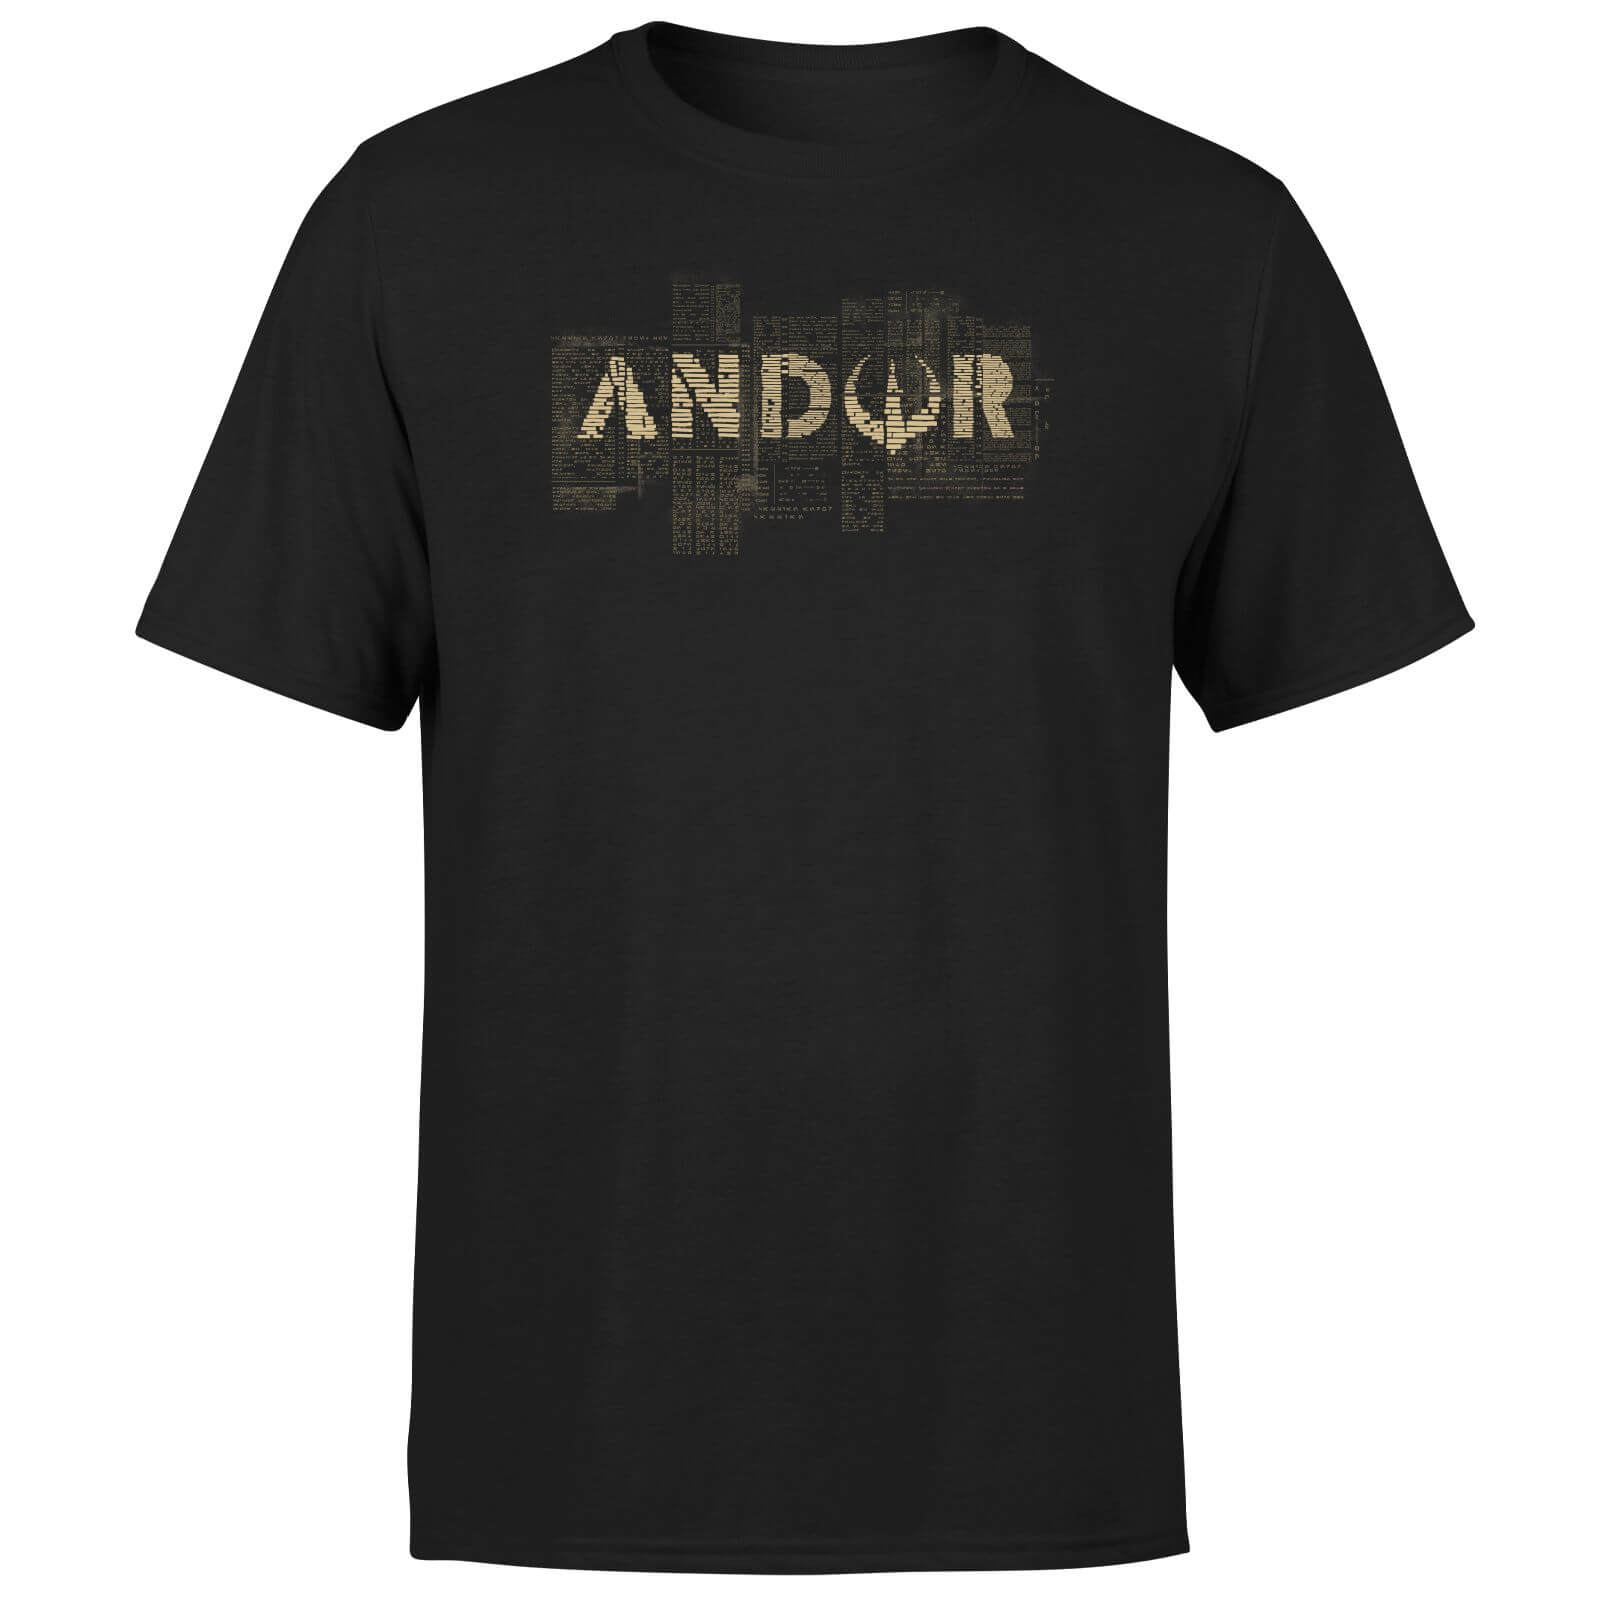 Star Wars Andor Distress Tread Logo Unisex T-Shirt - Black - M - Black